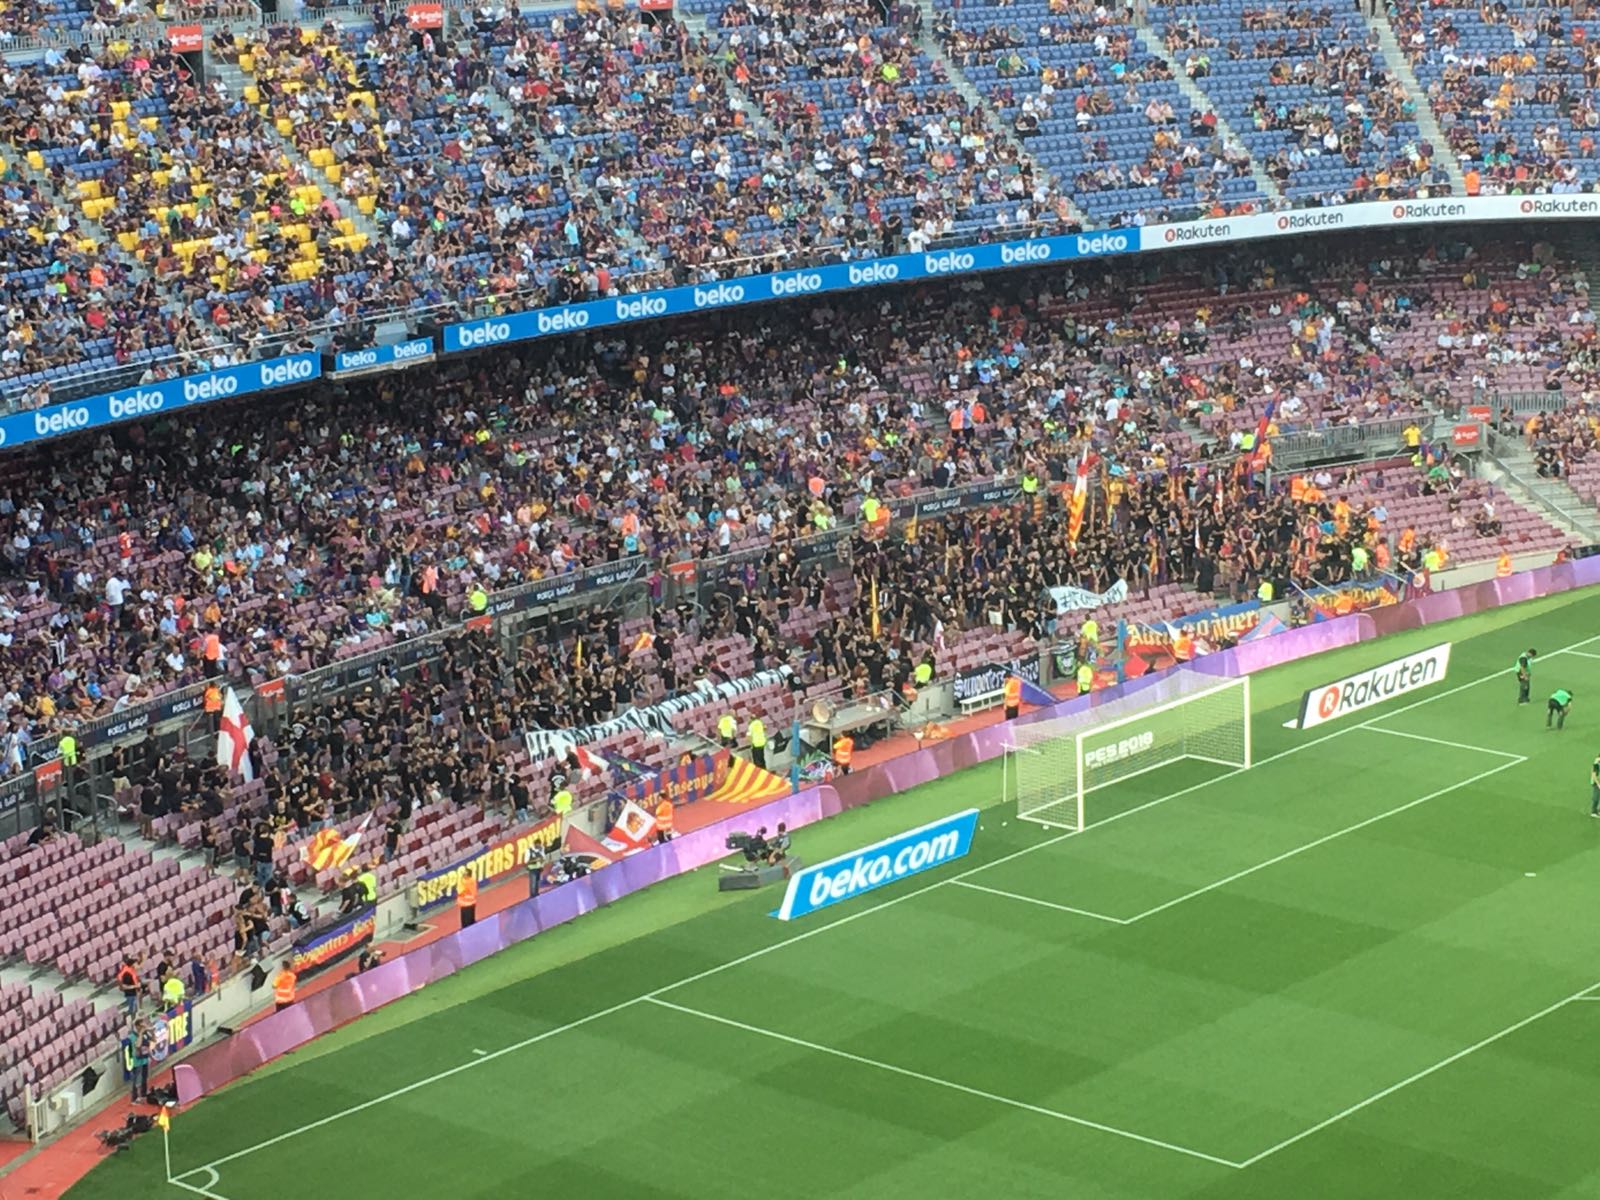 El Camp Nou continua gritando "independència!" en el 17'14"